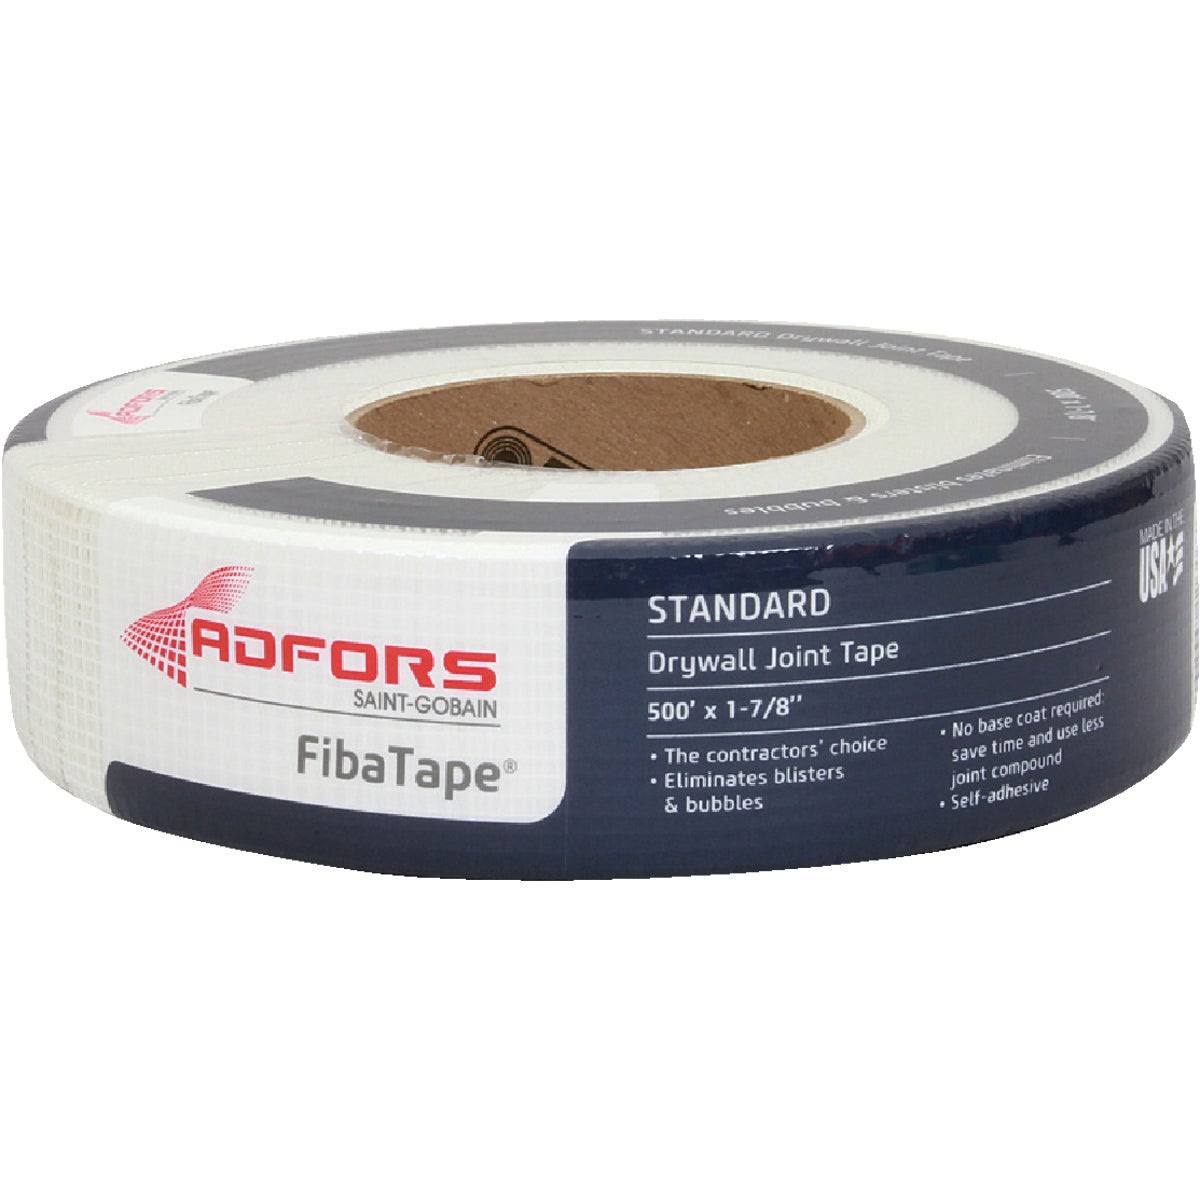 FibaTape Drywall Joint Tape - White